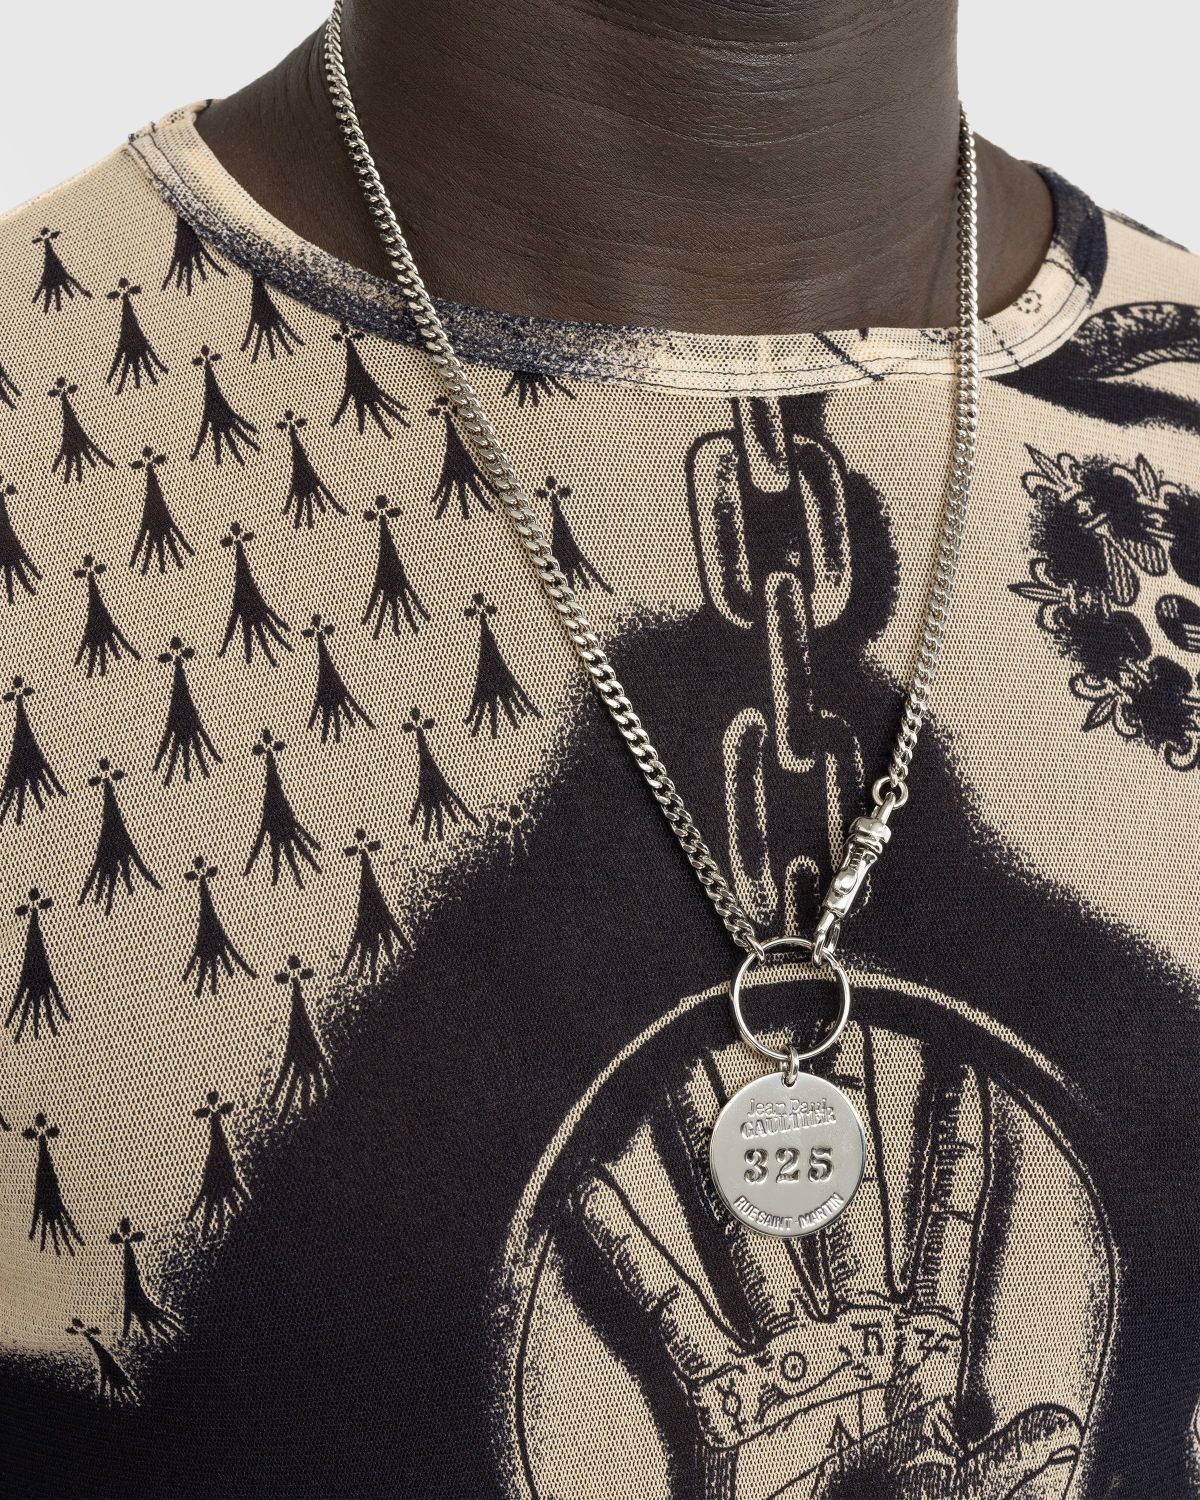 Jean Paul Gaultier – 325 Necklace Silver